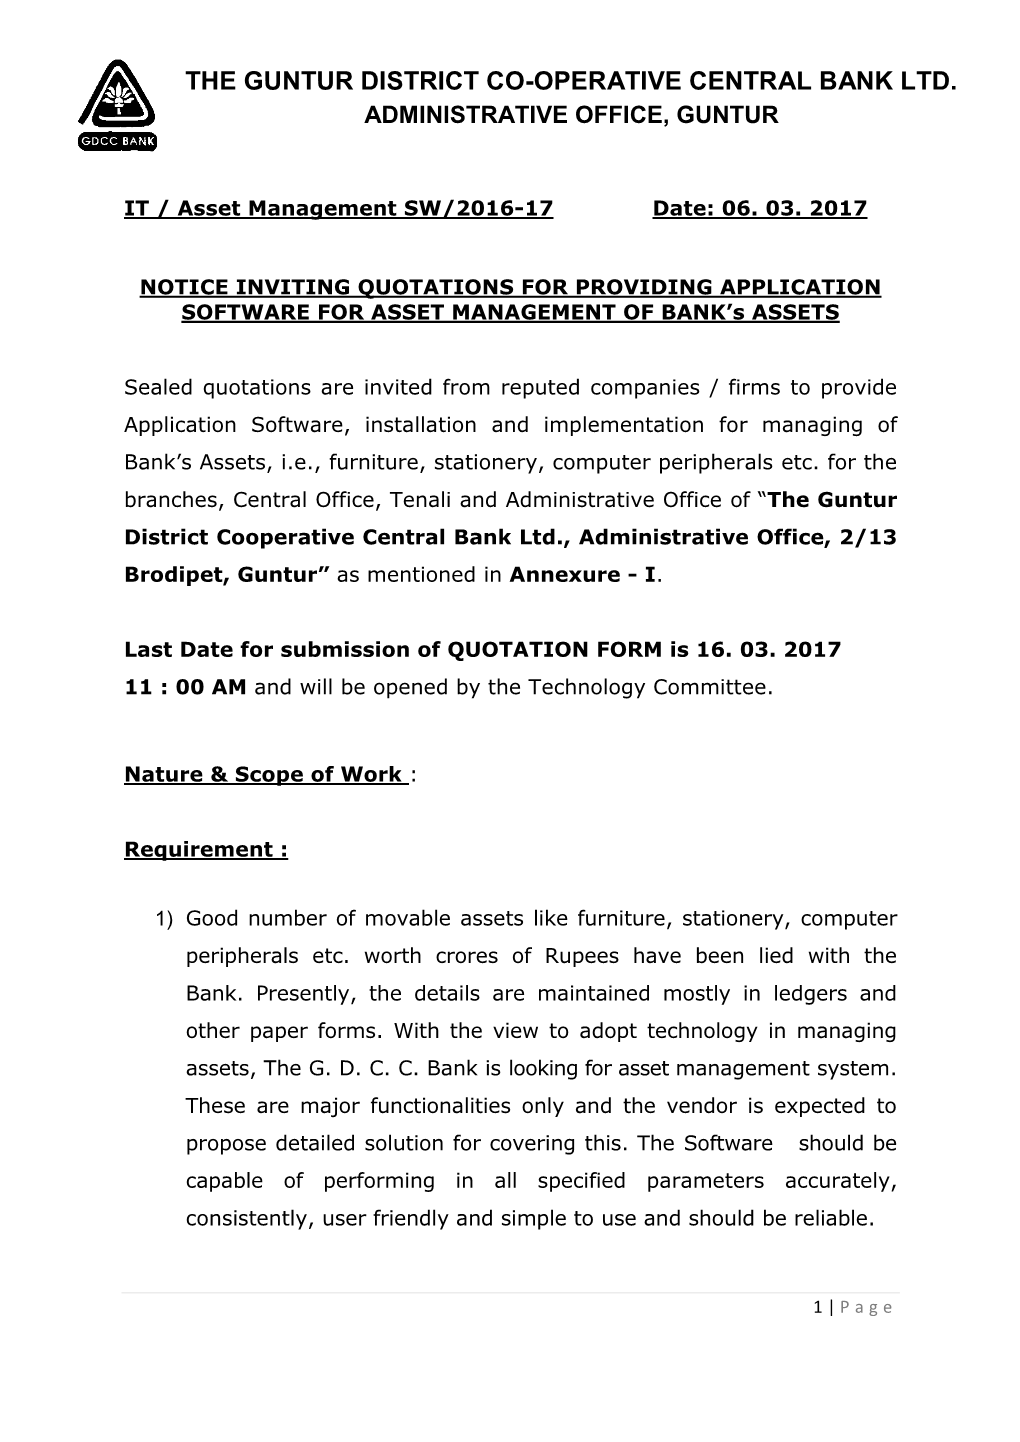 The Guntur District Co-Operative Central Bank Ltd